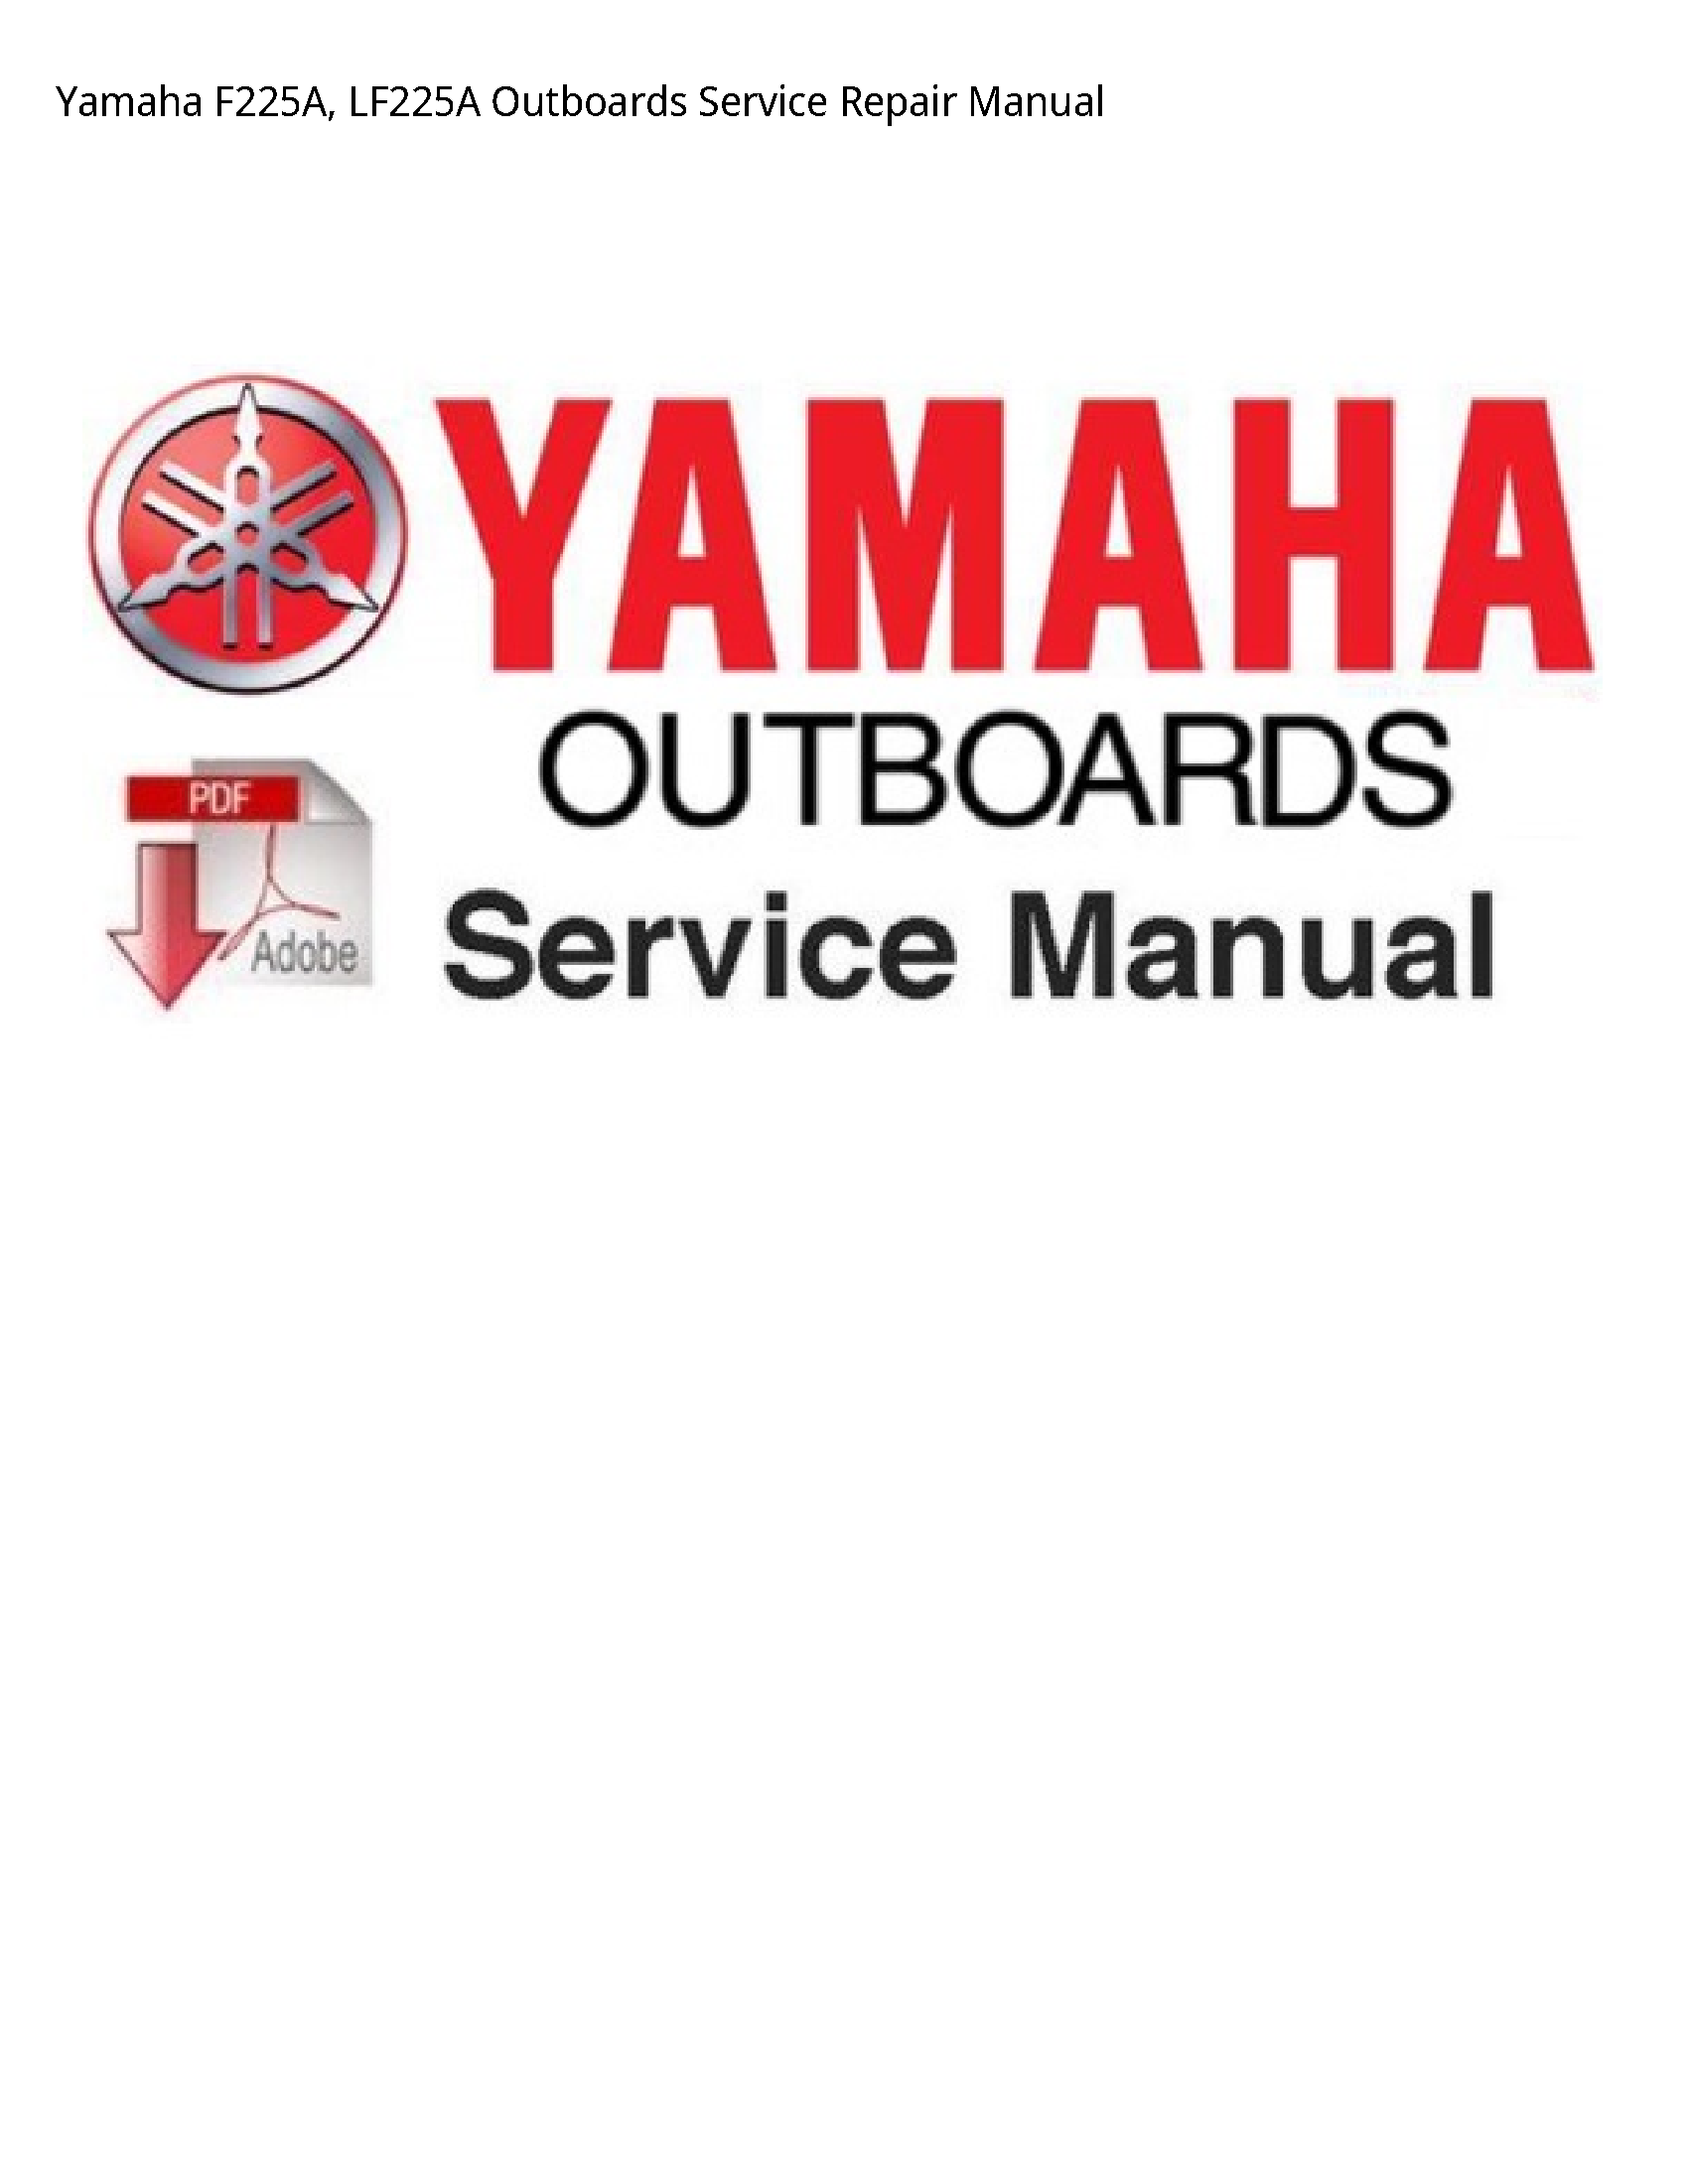 Yamaha F225A Outboards manual